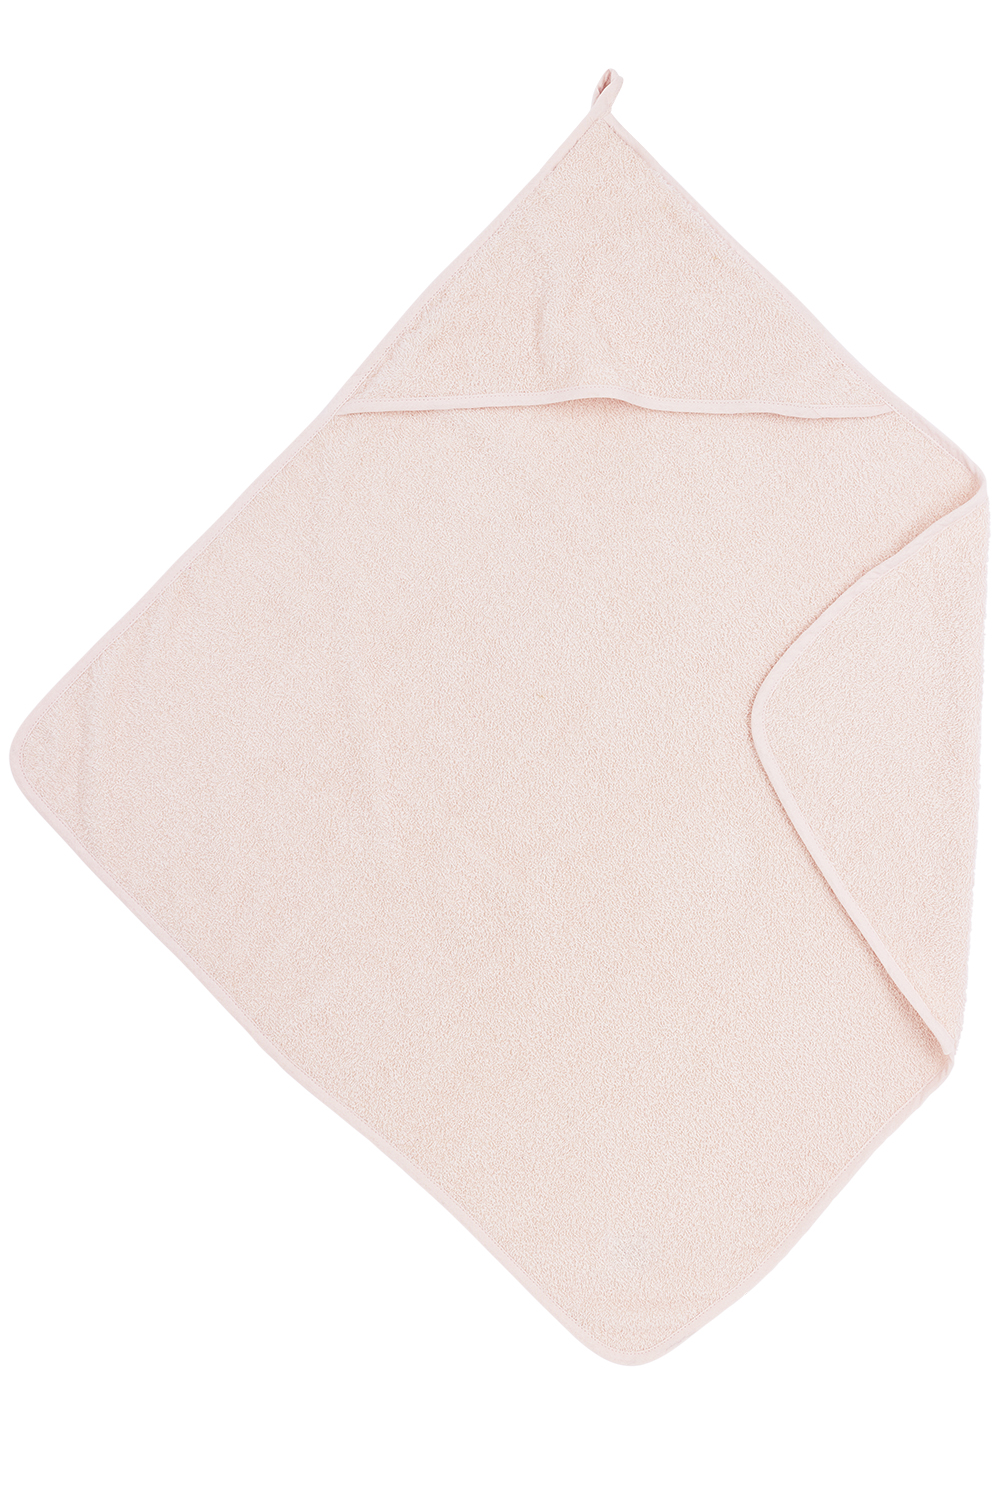 Badcape badstof Uni - soft pink - 75x75cm